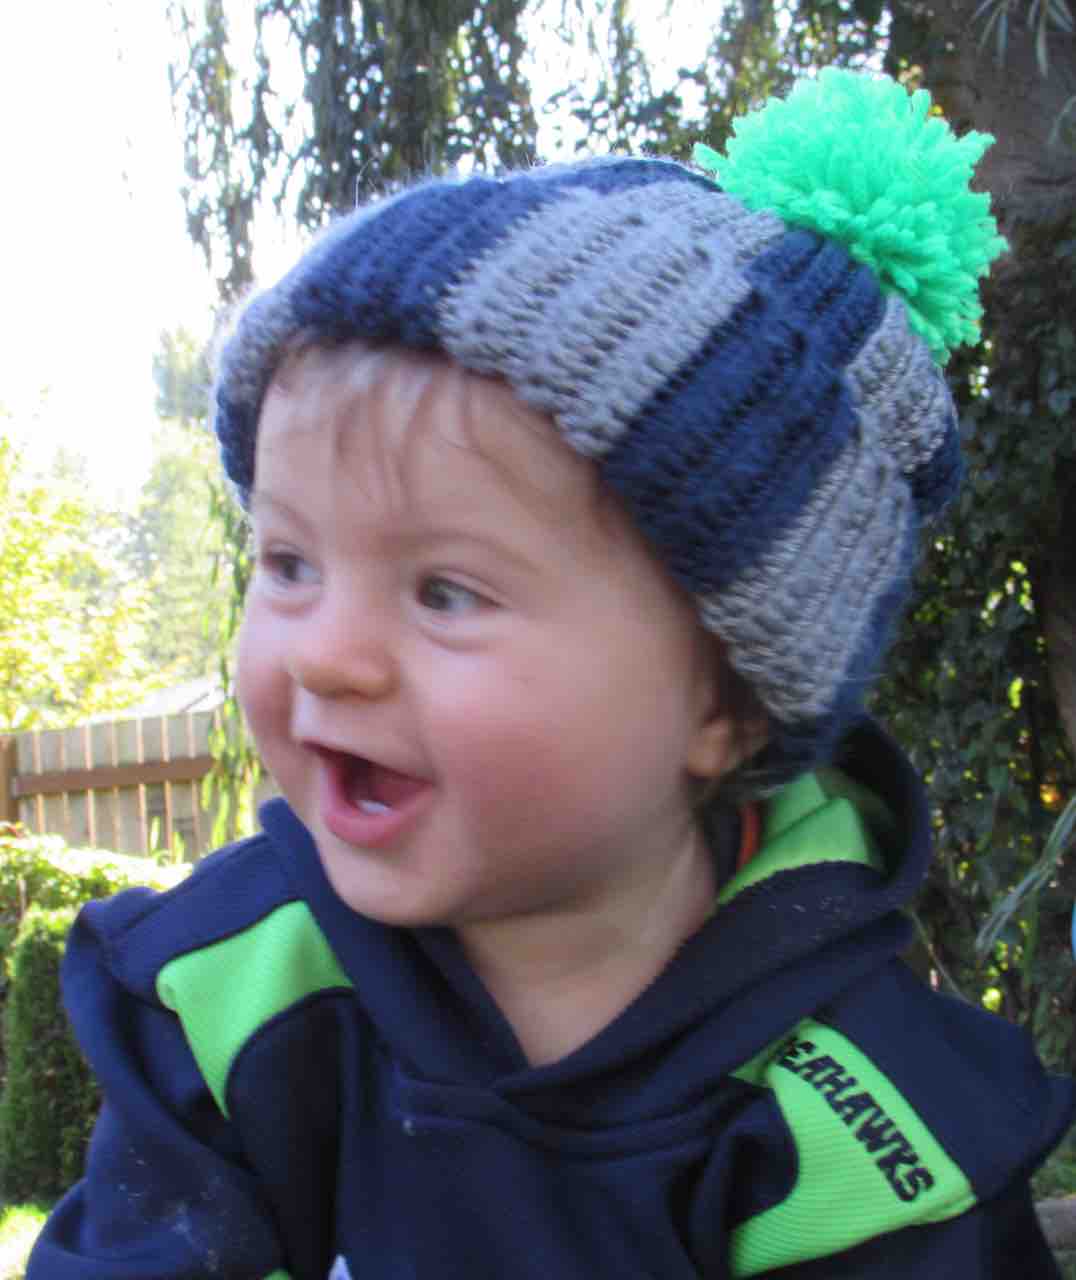 SALE Beanie 3-6 Months Cap Hat Boys Girls Baby 1 EACH Striped Crochet Seahawks